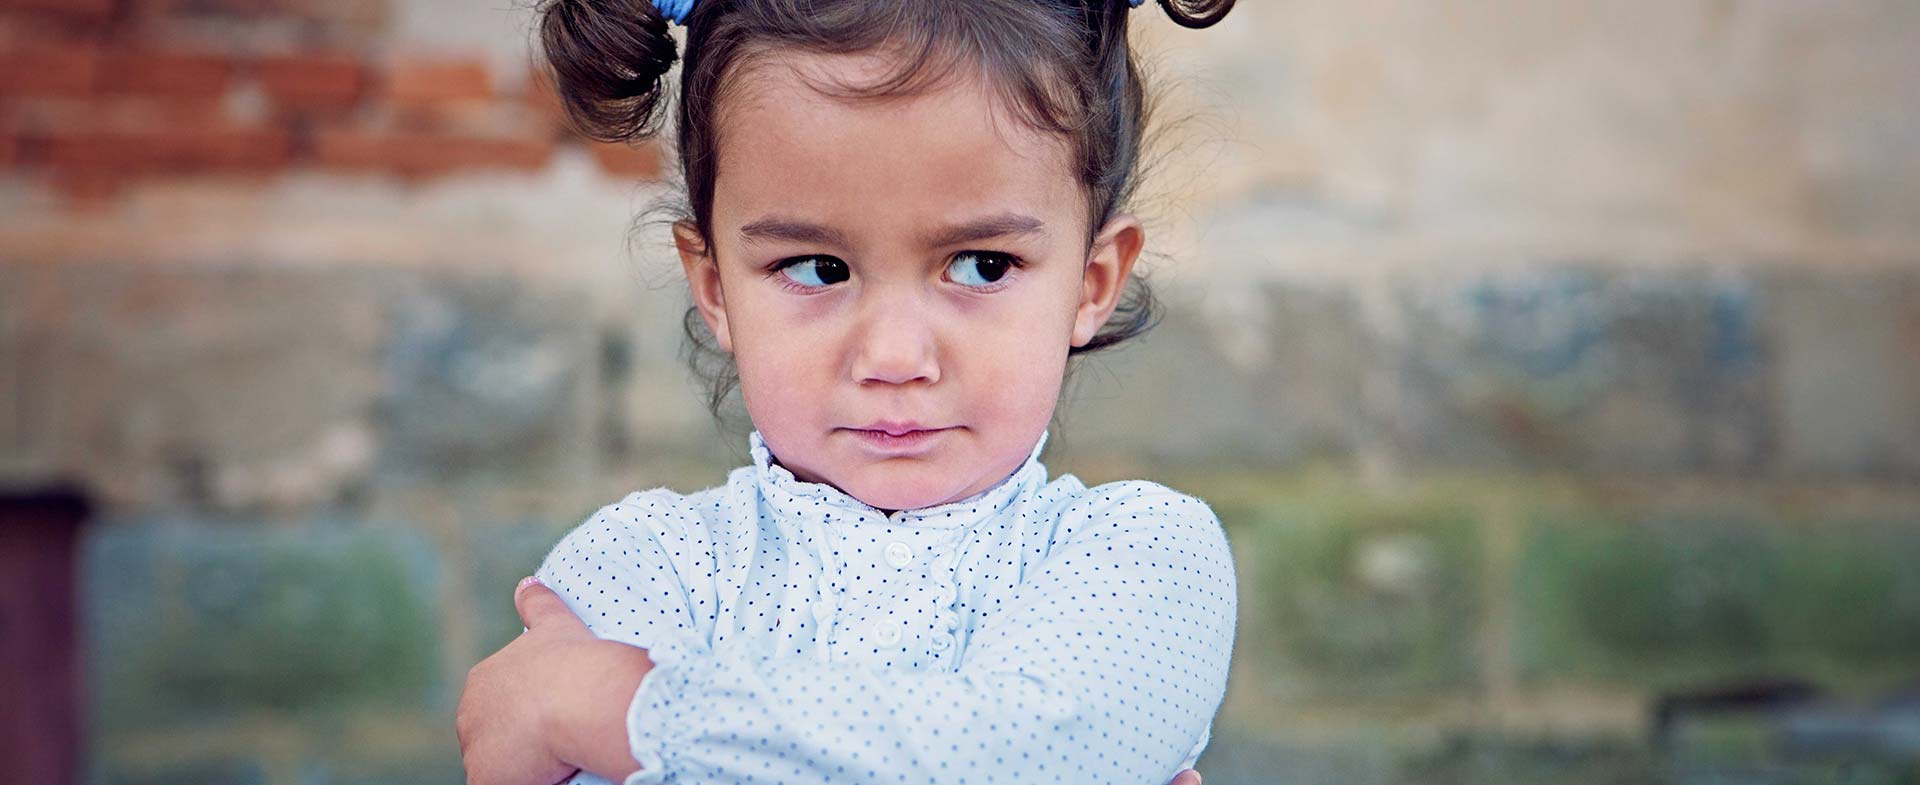 grumpy little girl